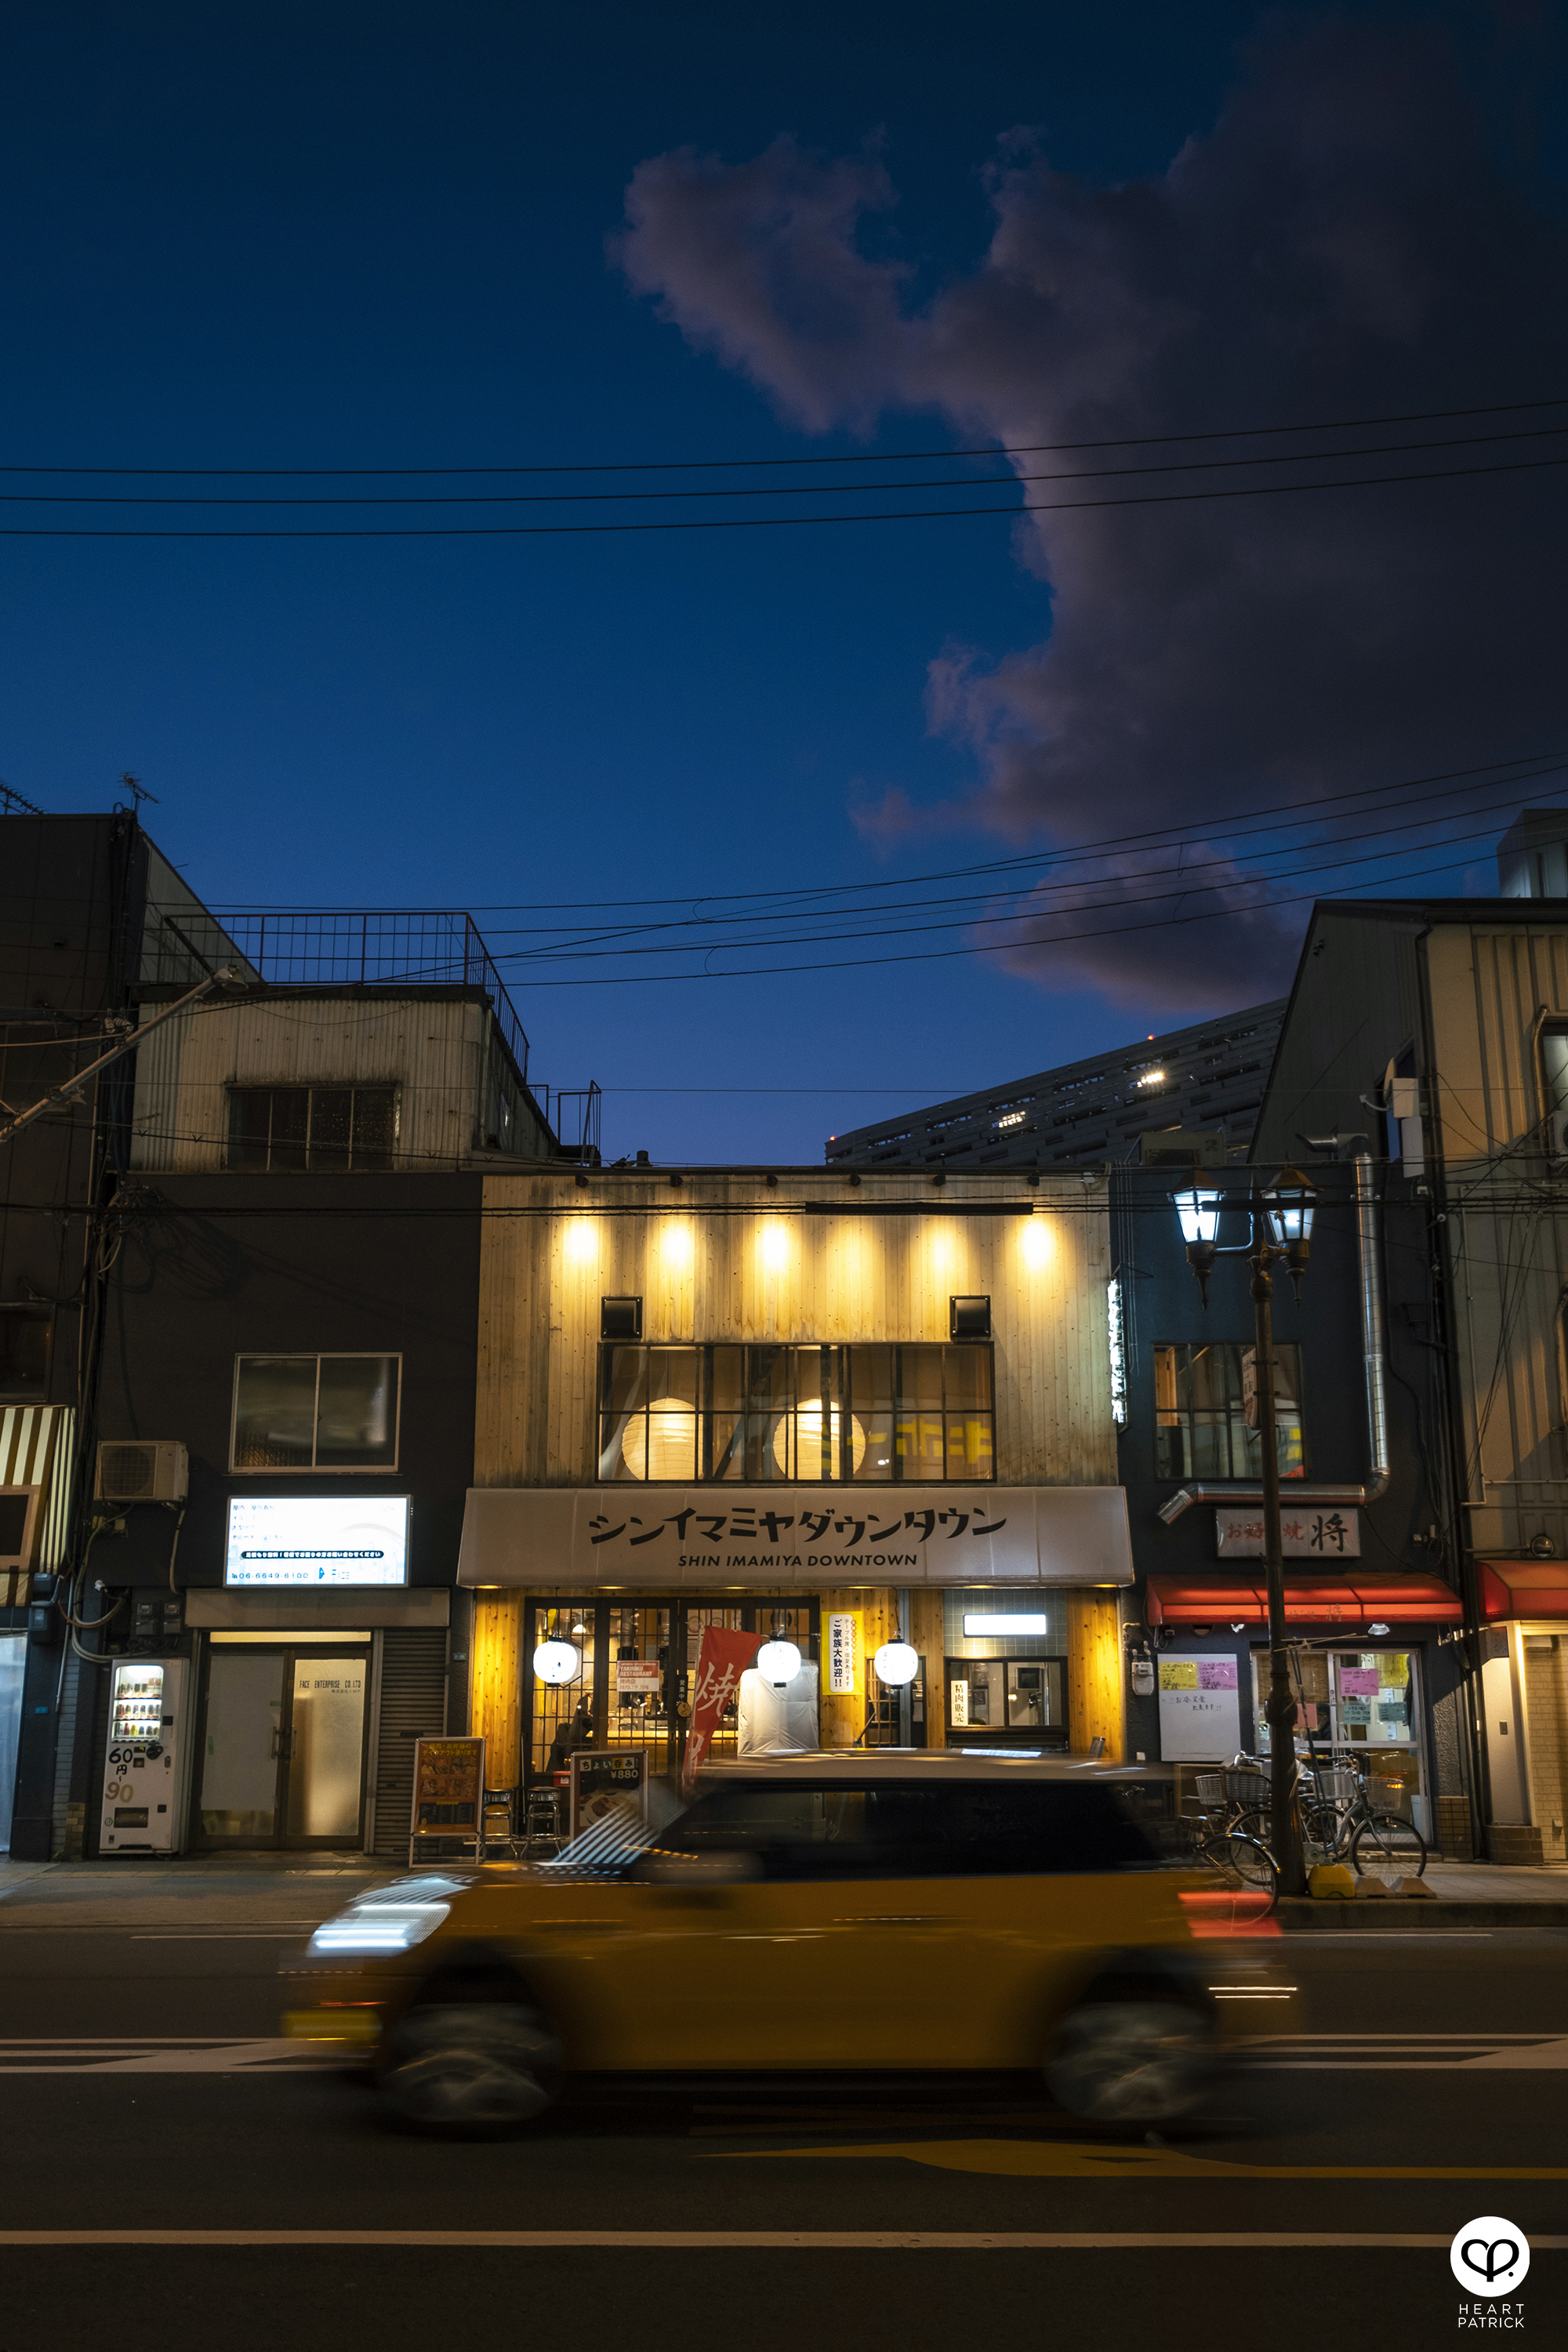 heartpatrick travel tokyo japan street photography